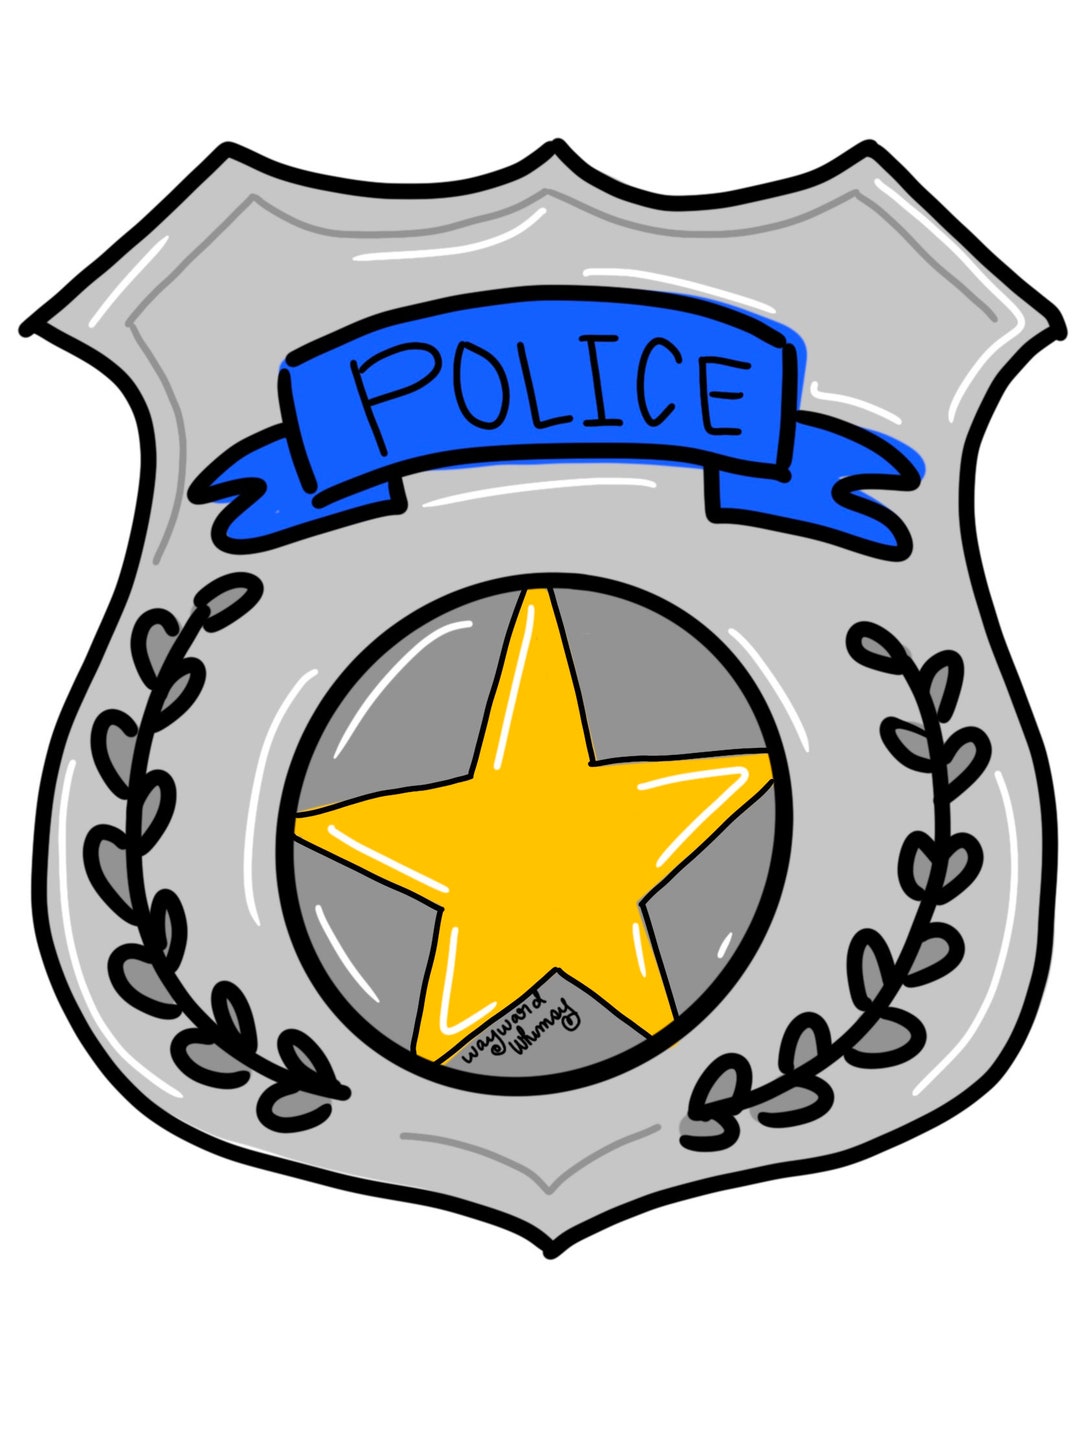 reading detective badge for kids